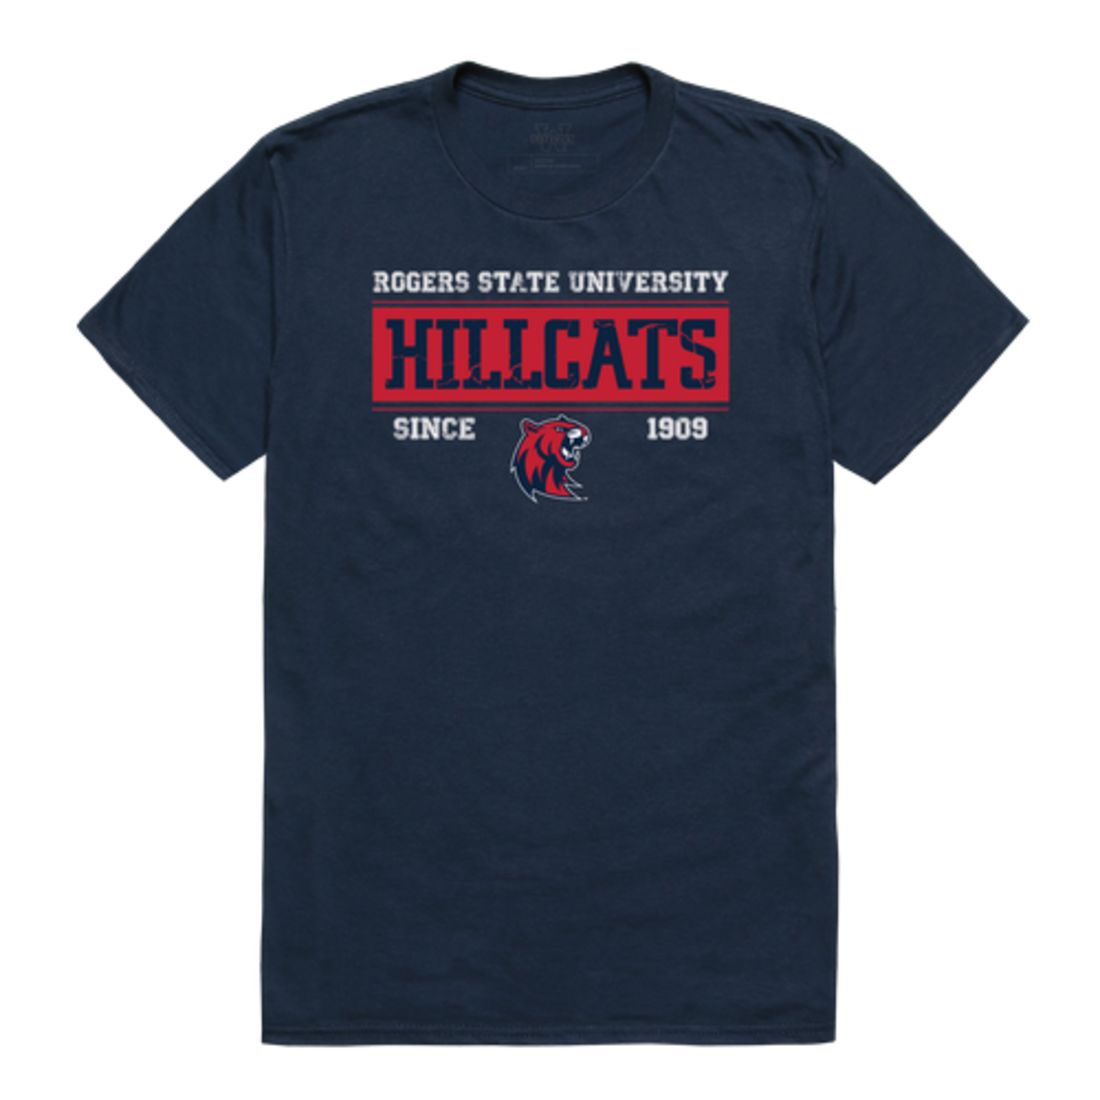 Rogers State University Hillcats Established T-Shirt Tee